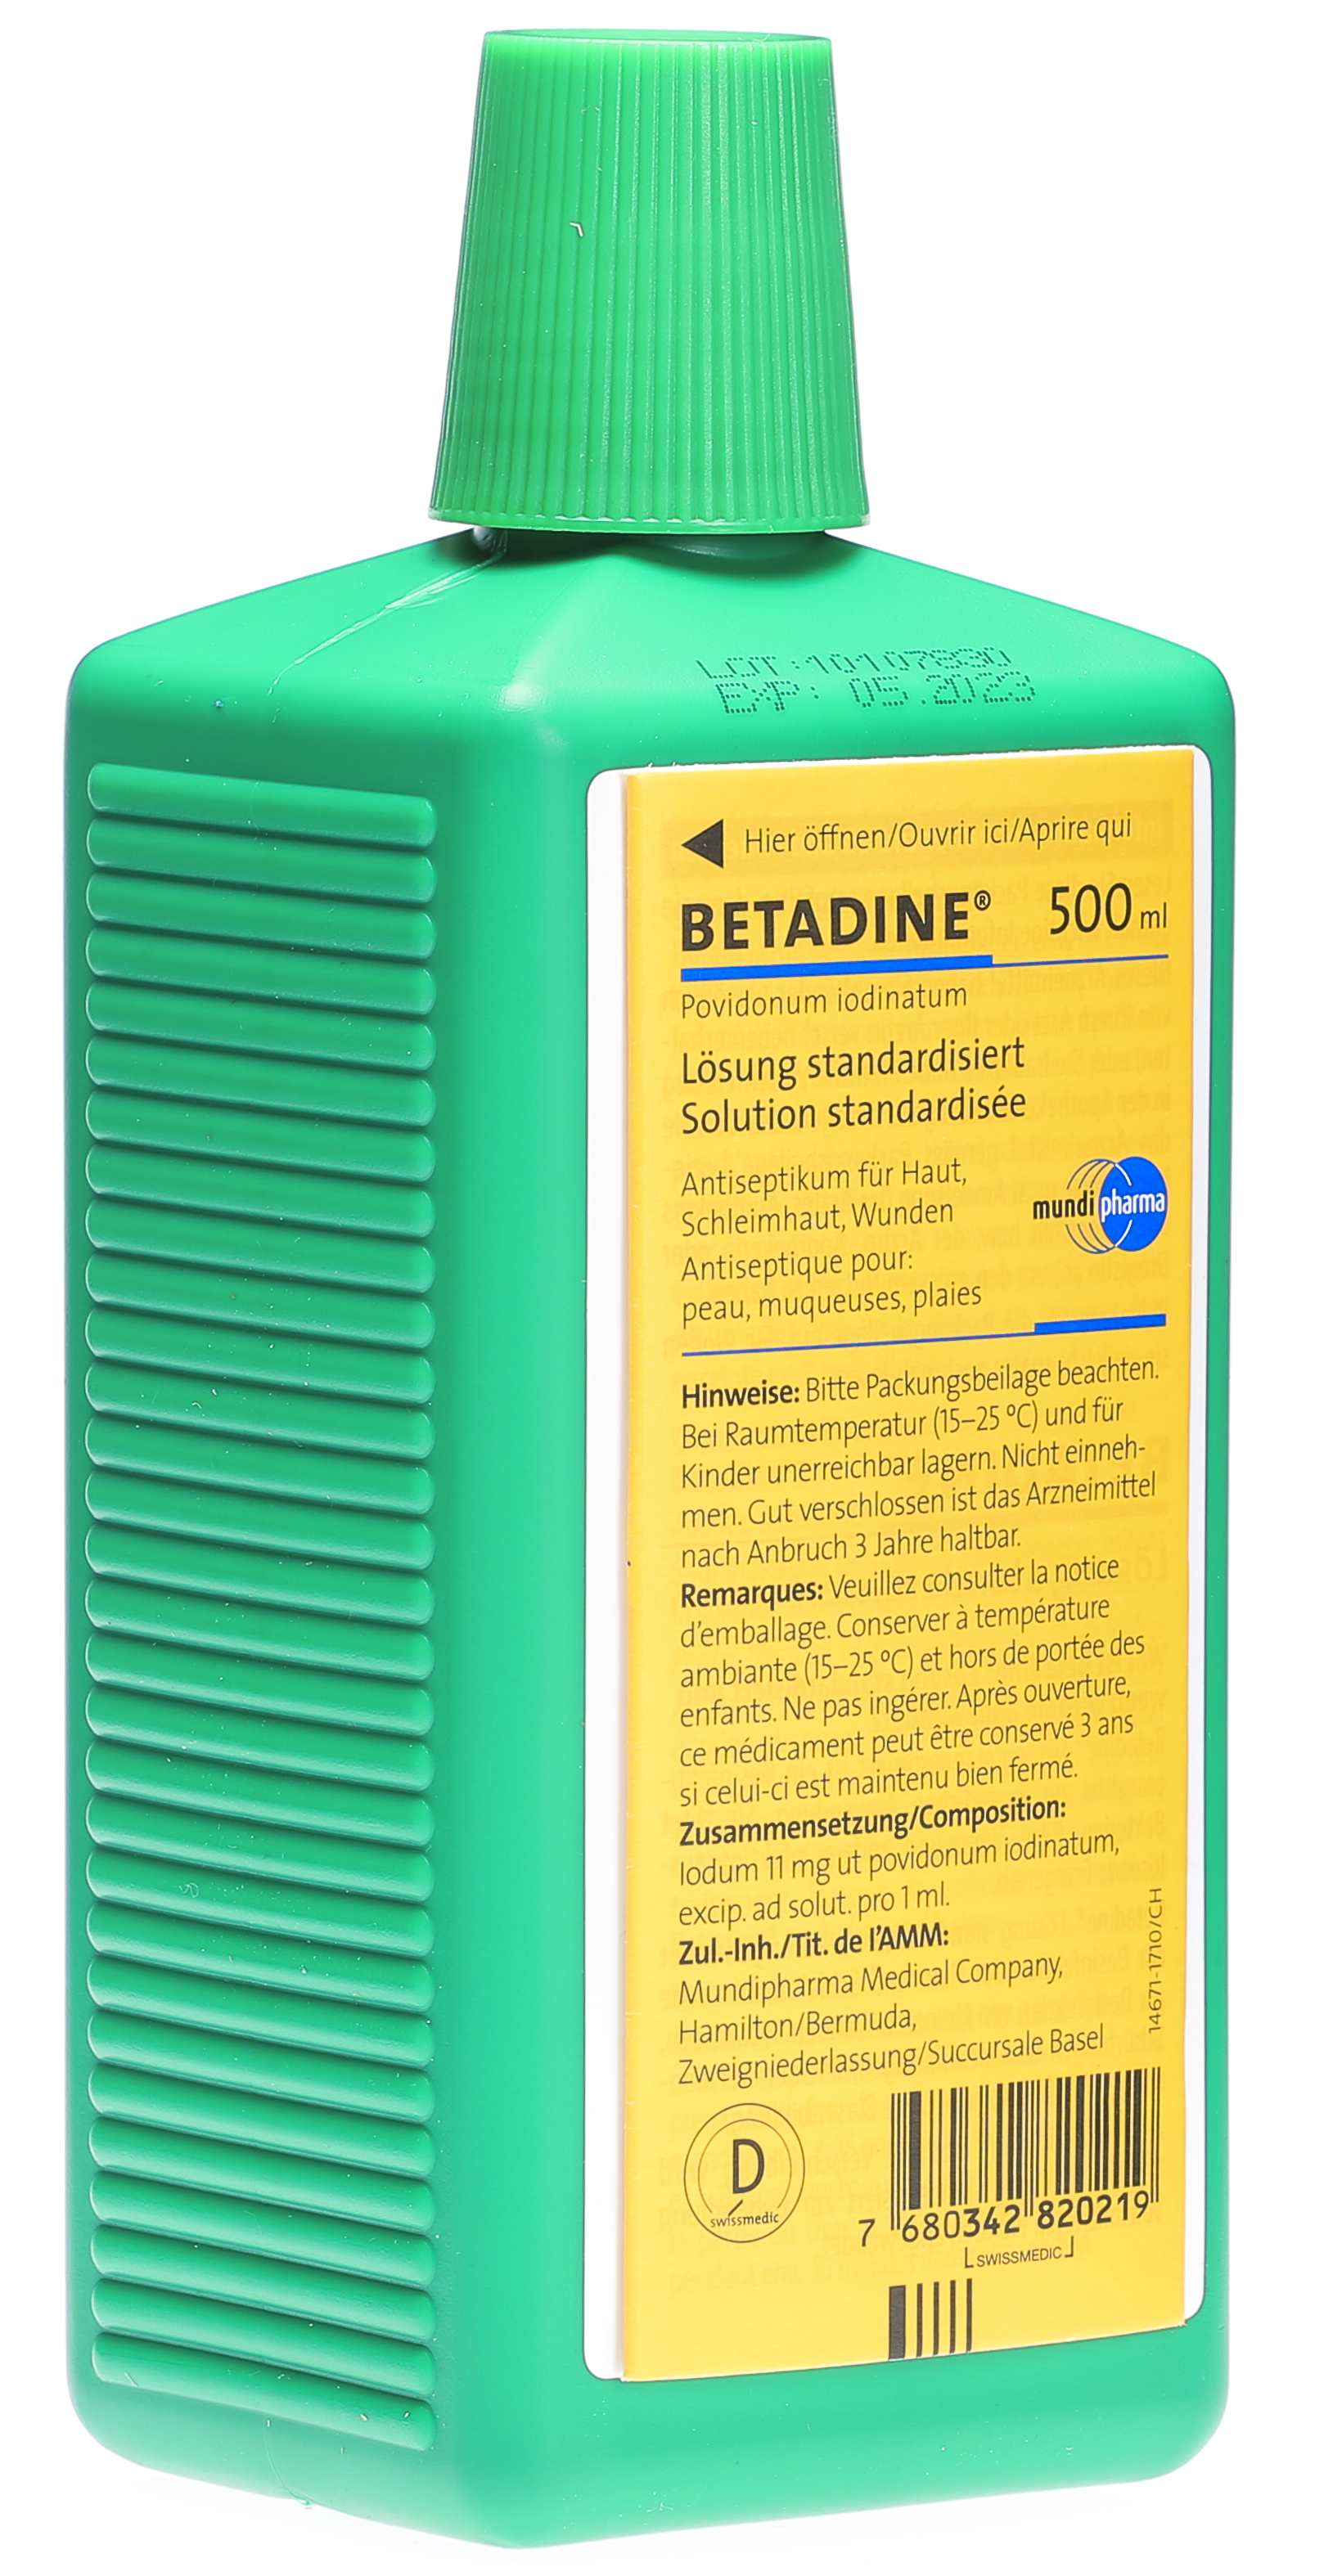 Betadine soluzione standard flacone 500 ml